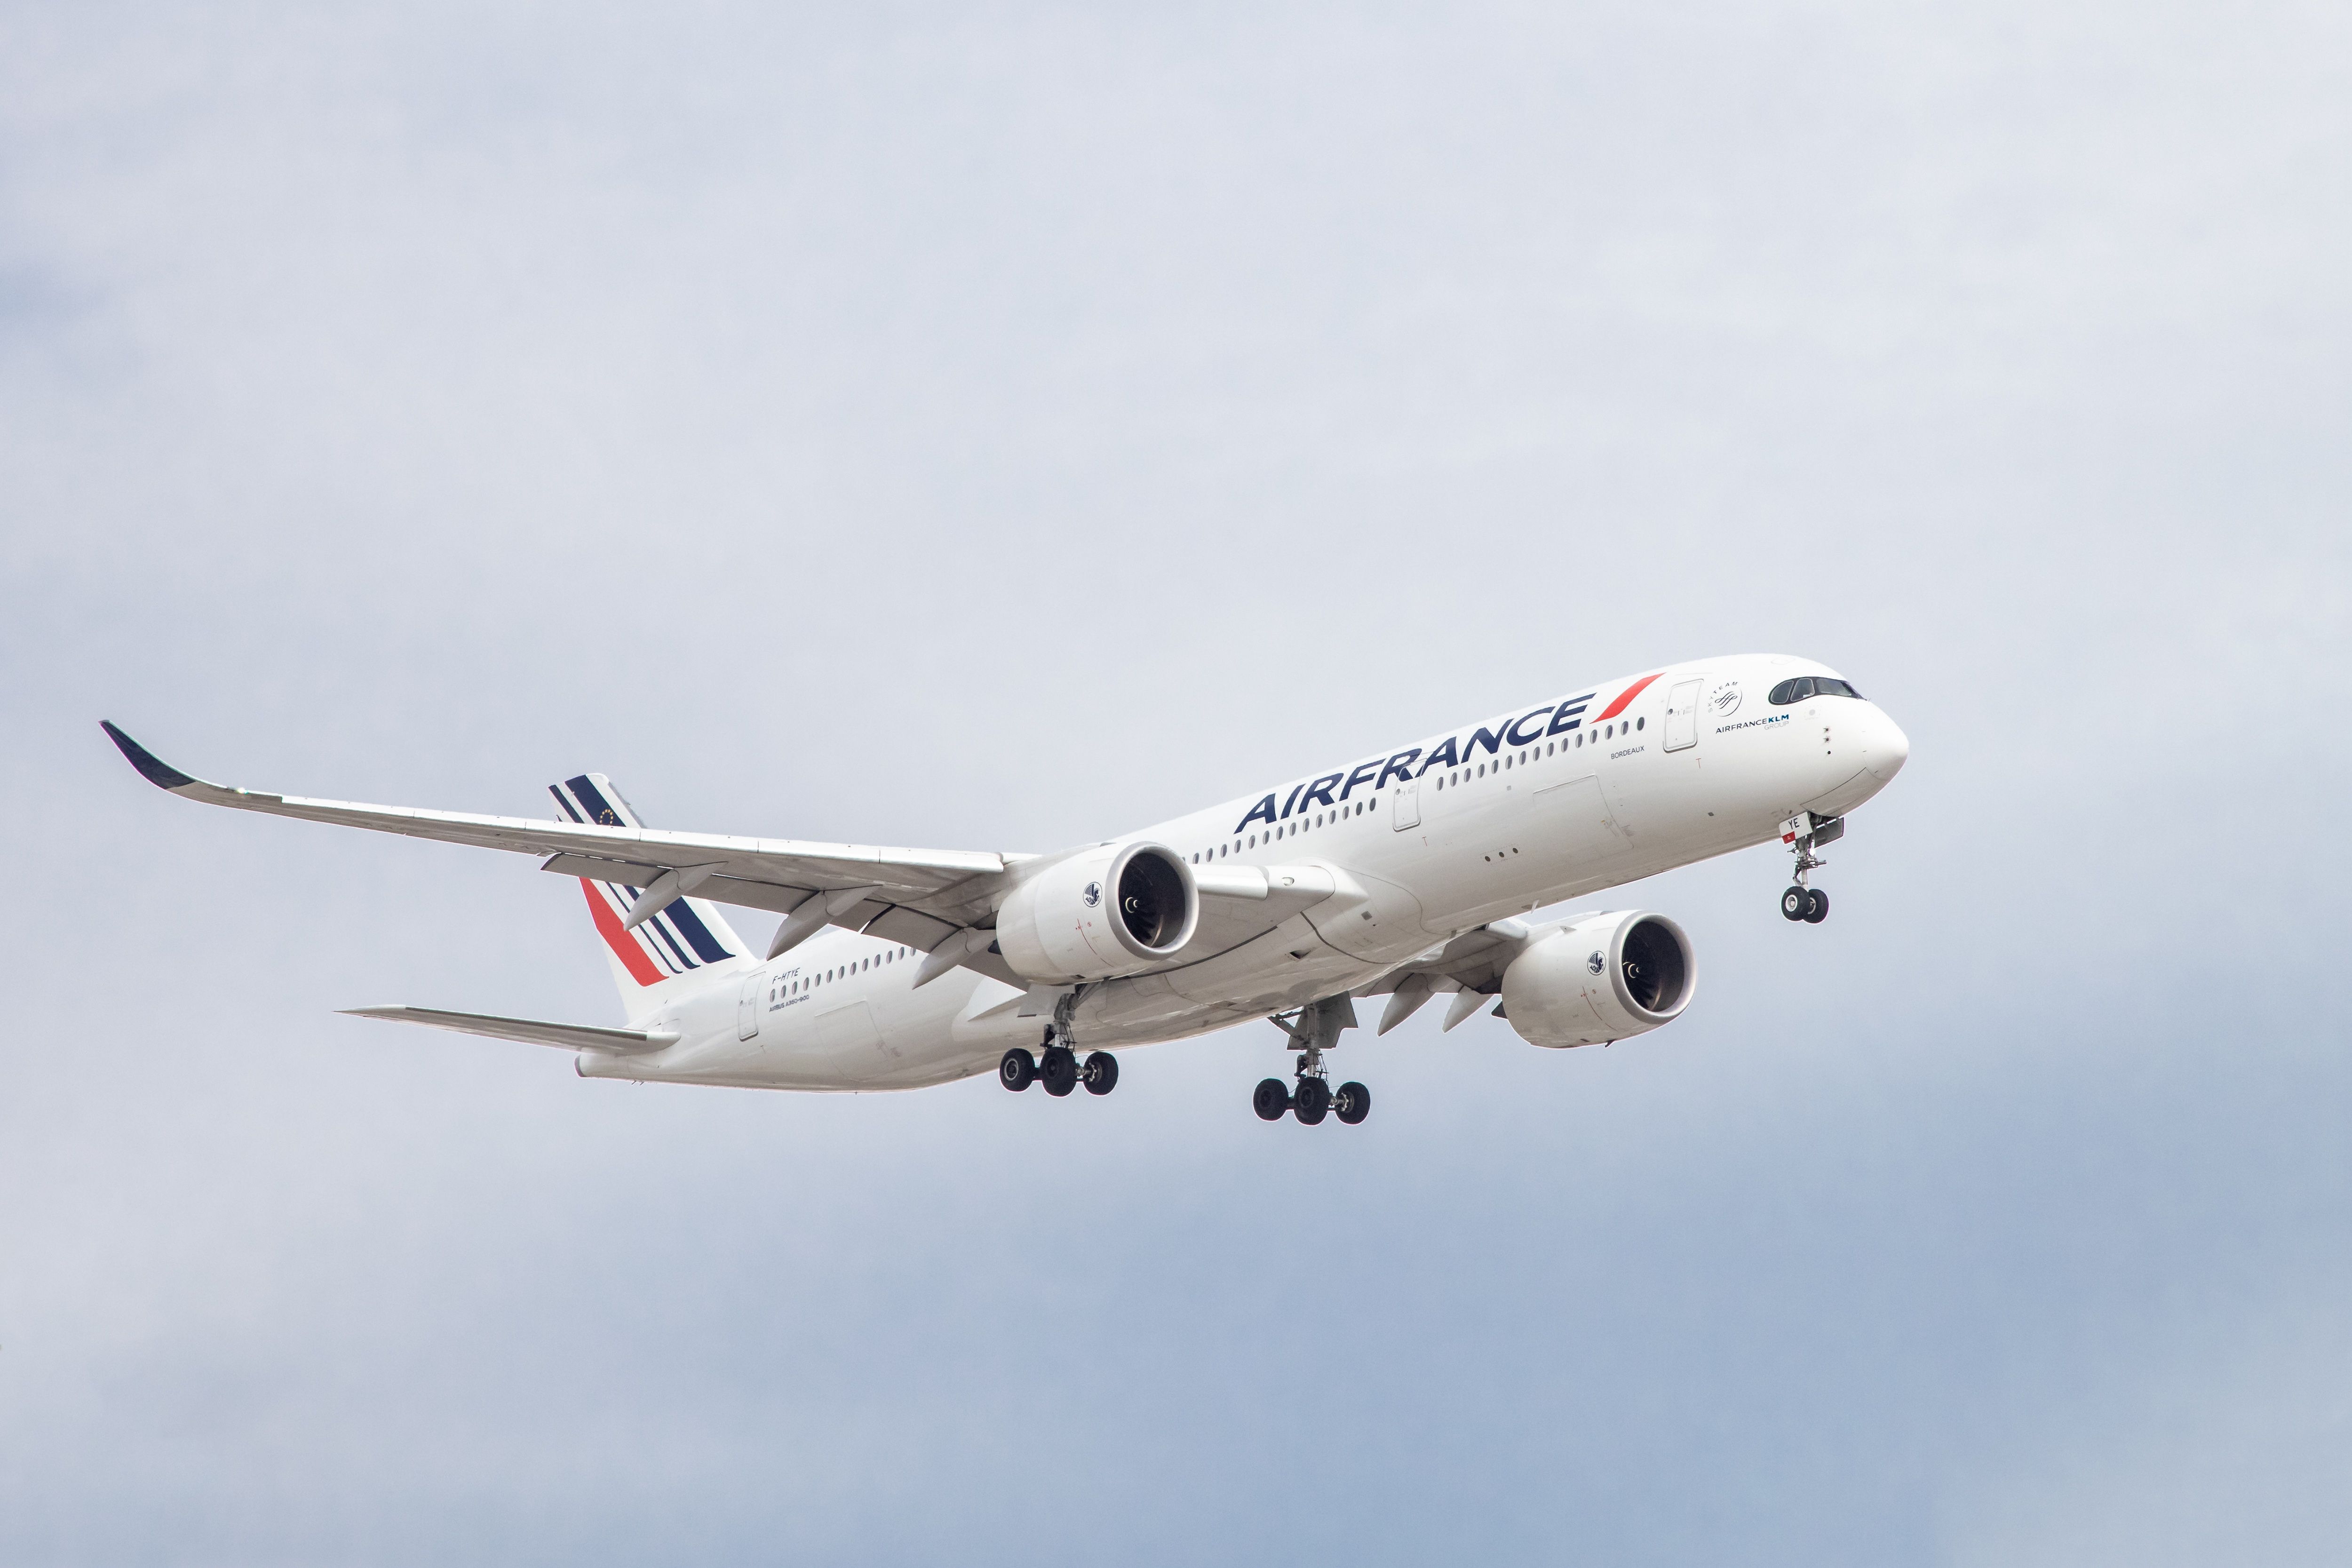 Air France Airbus A350 departing Toronto Pearson Airport